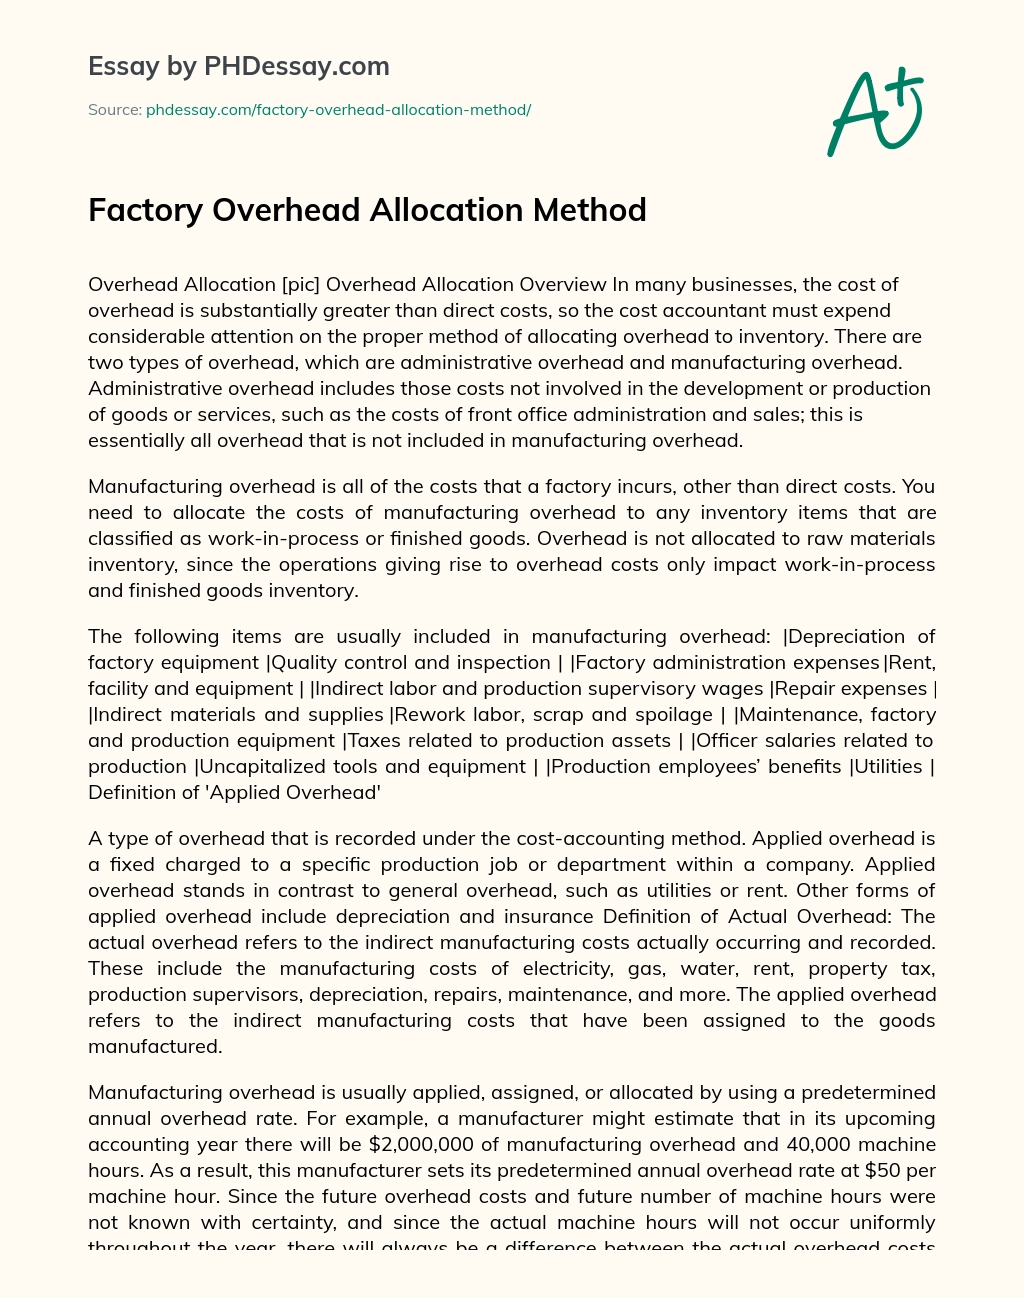 Factory Overhead Allocation Method essay